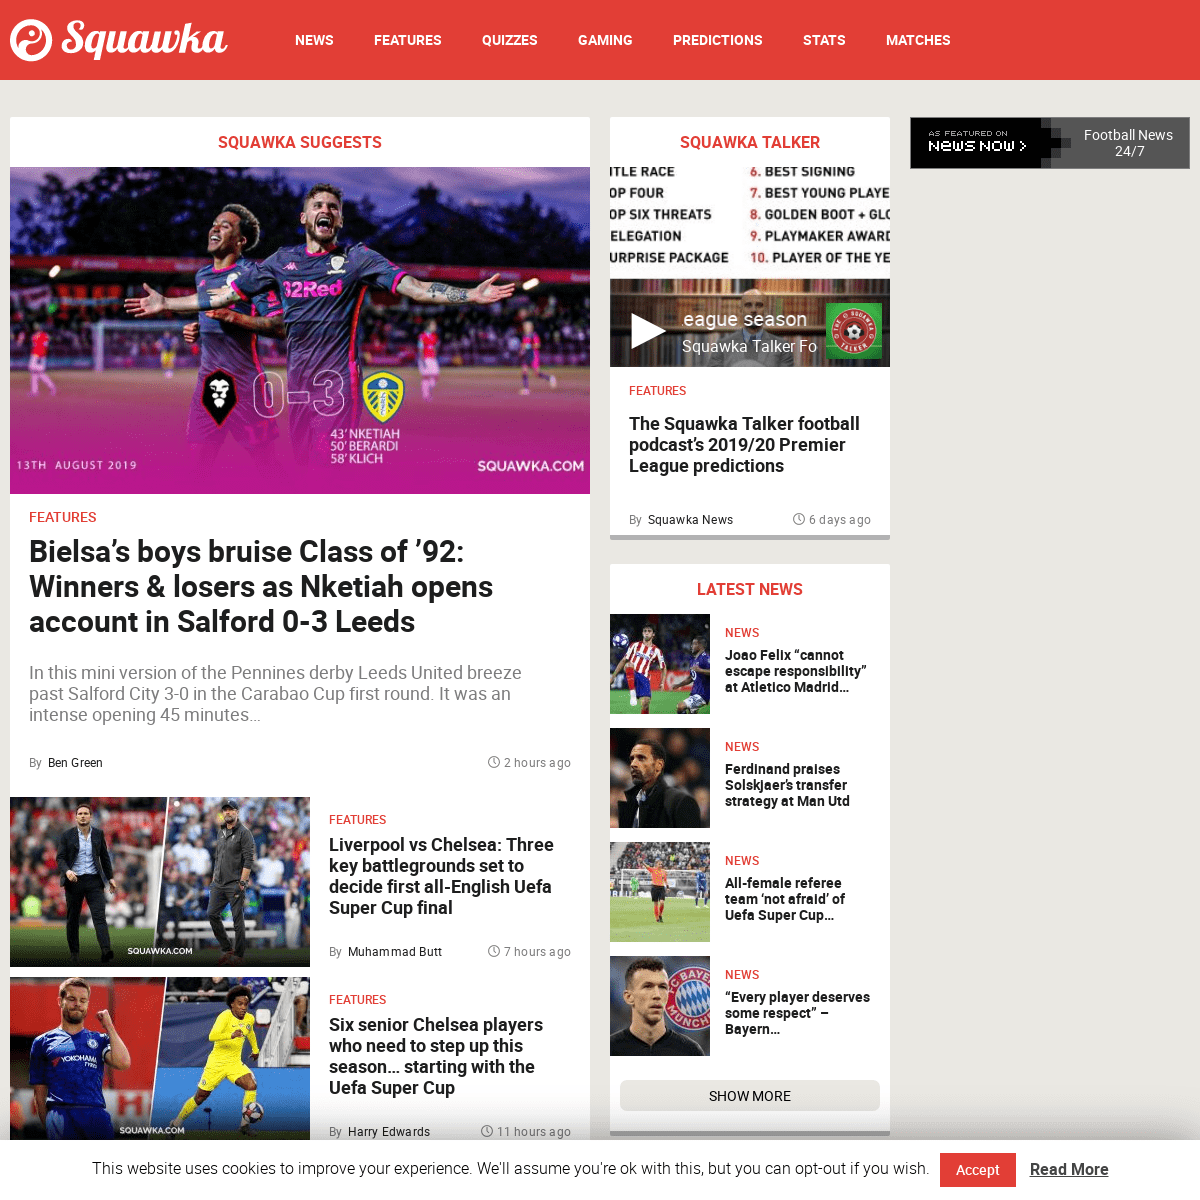 Squawka | The Home of Football News, Analysis, Opinion & Stats